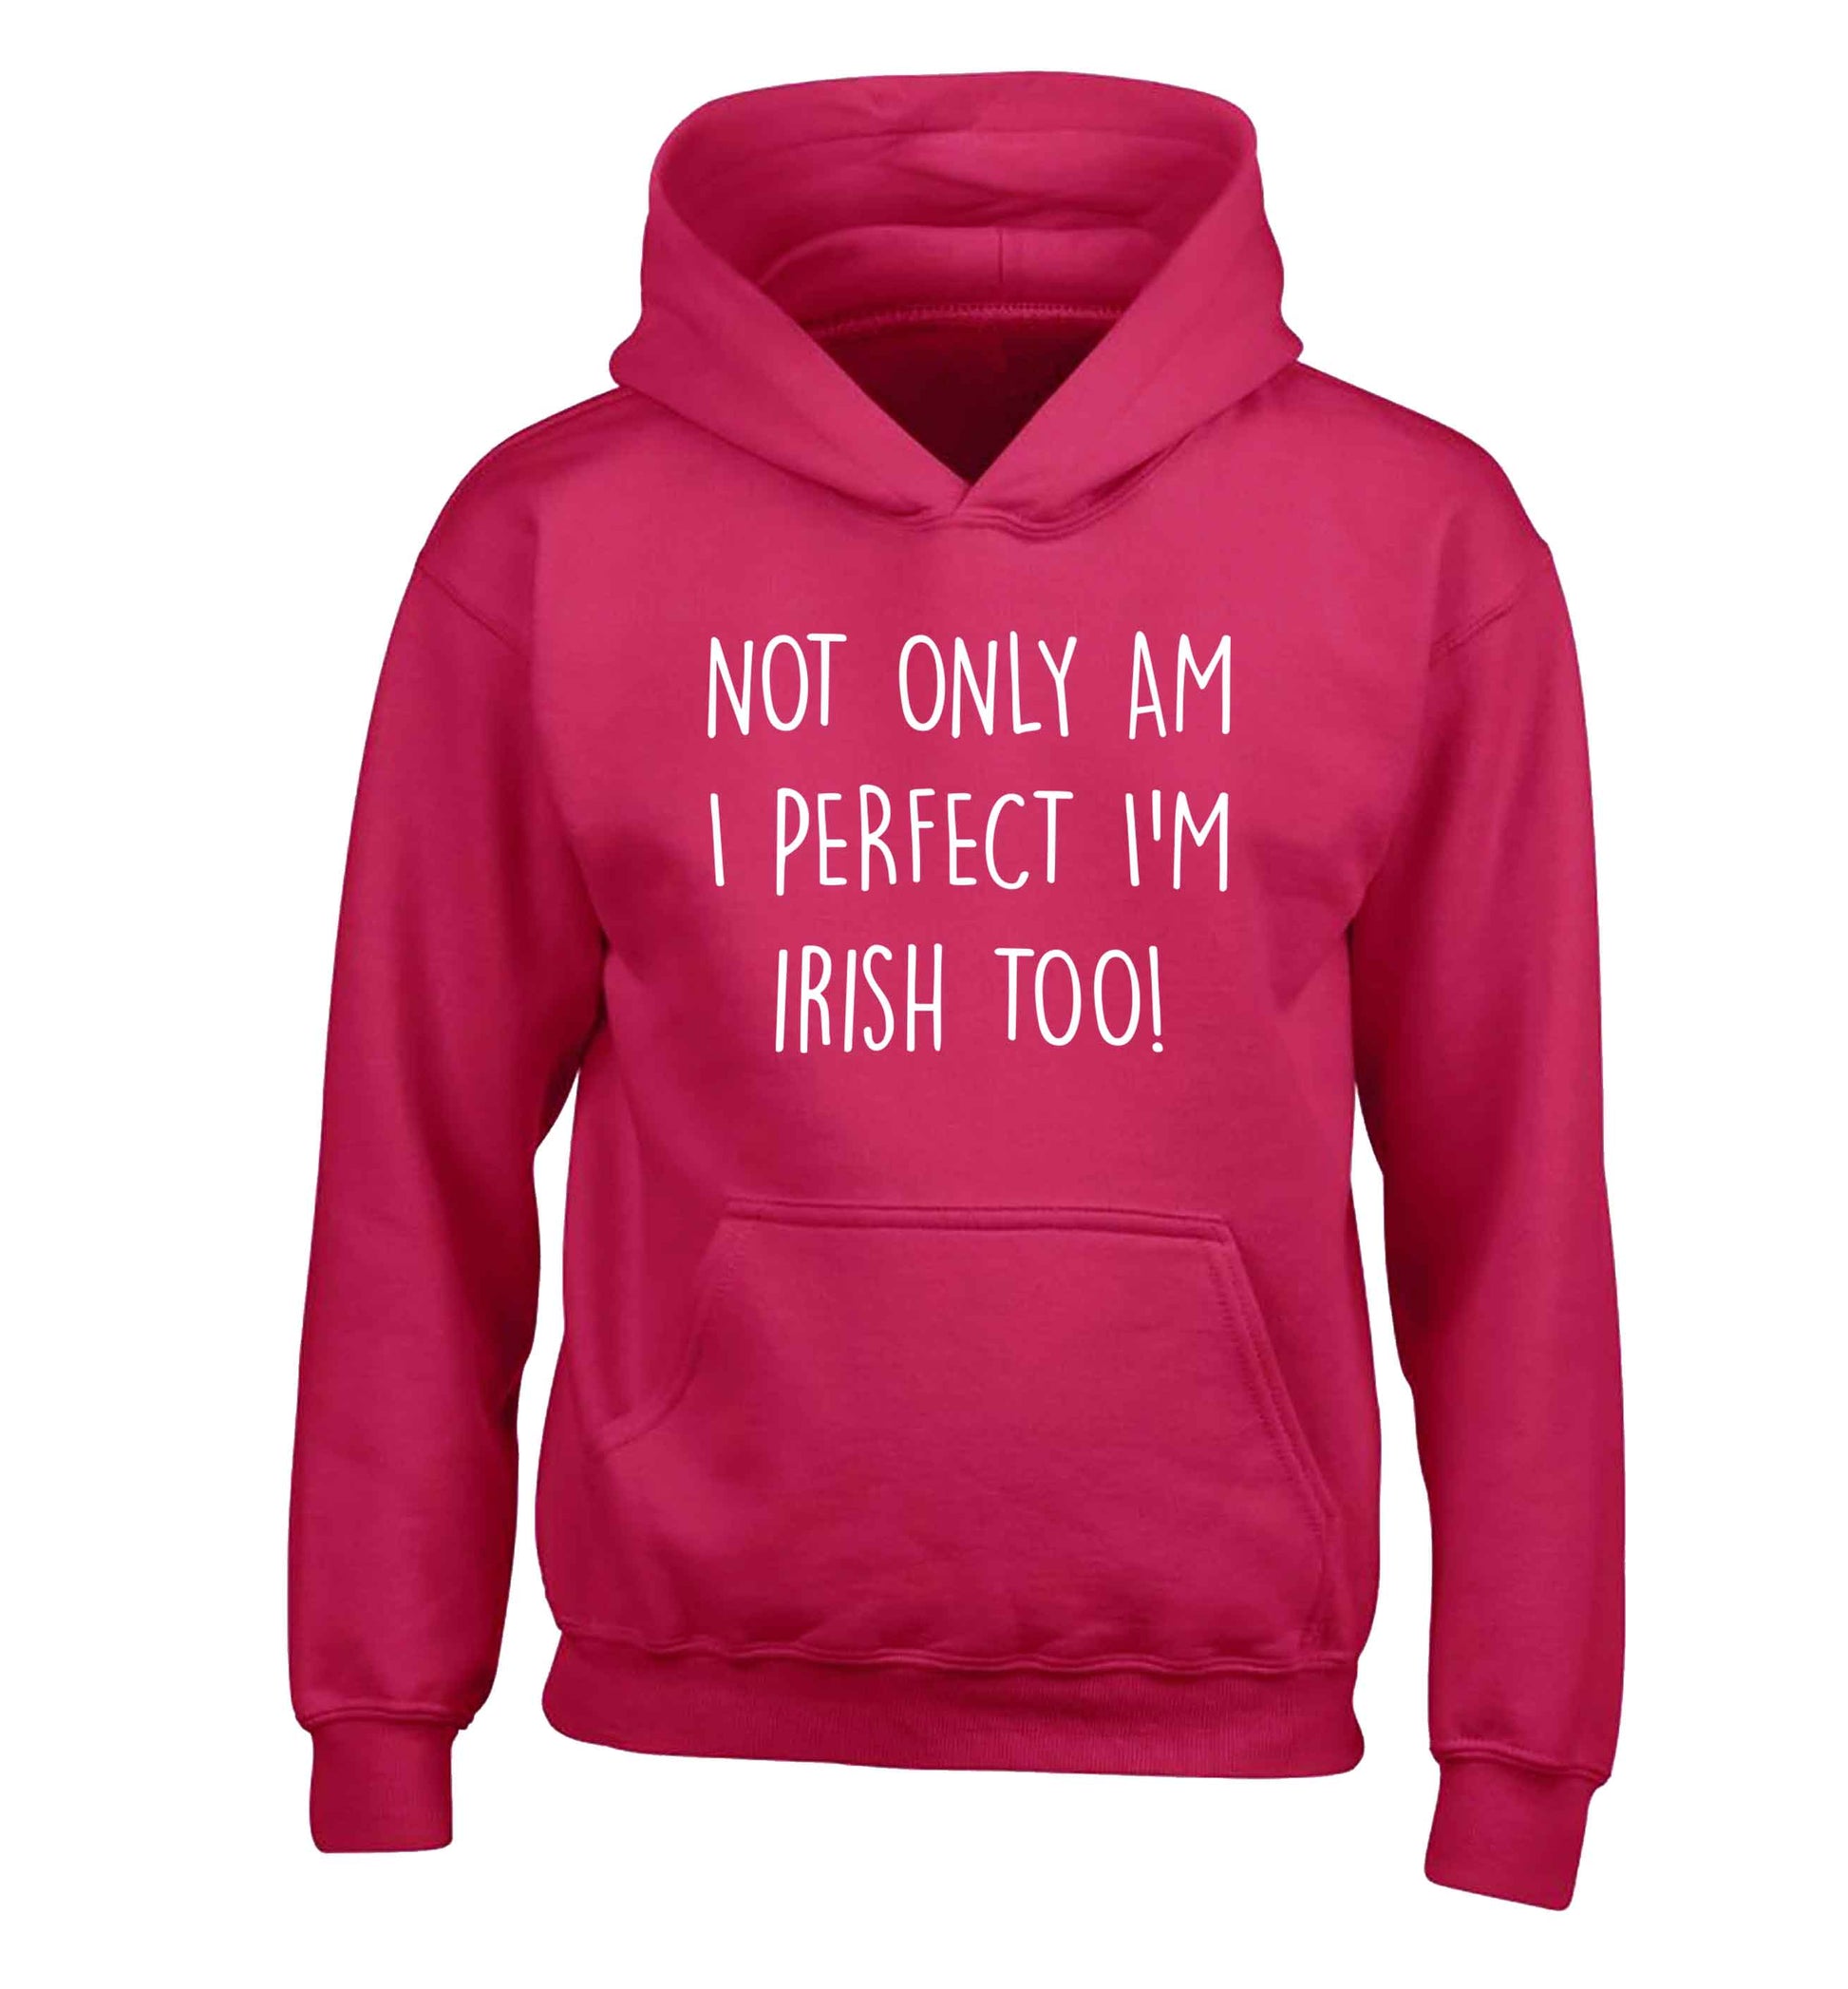 Not only am I perfect I'm Irish too! children's pink hoodie 12-13 Years